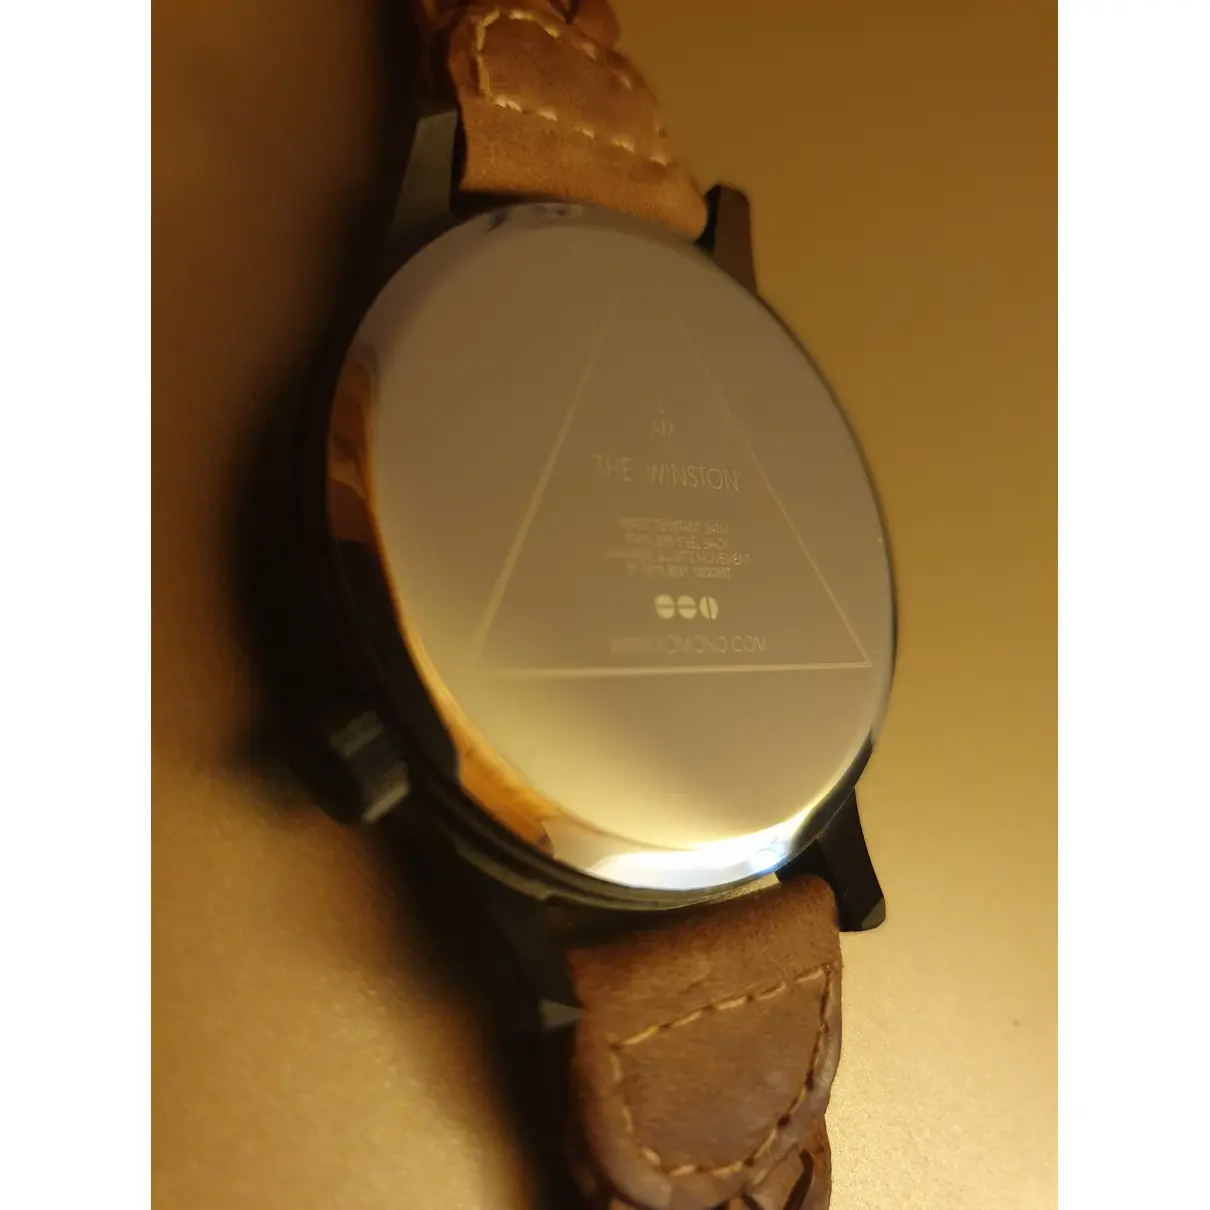 Buy Komono Watch online